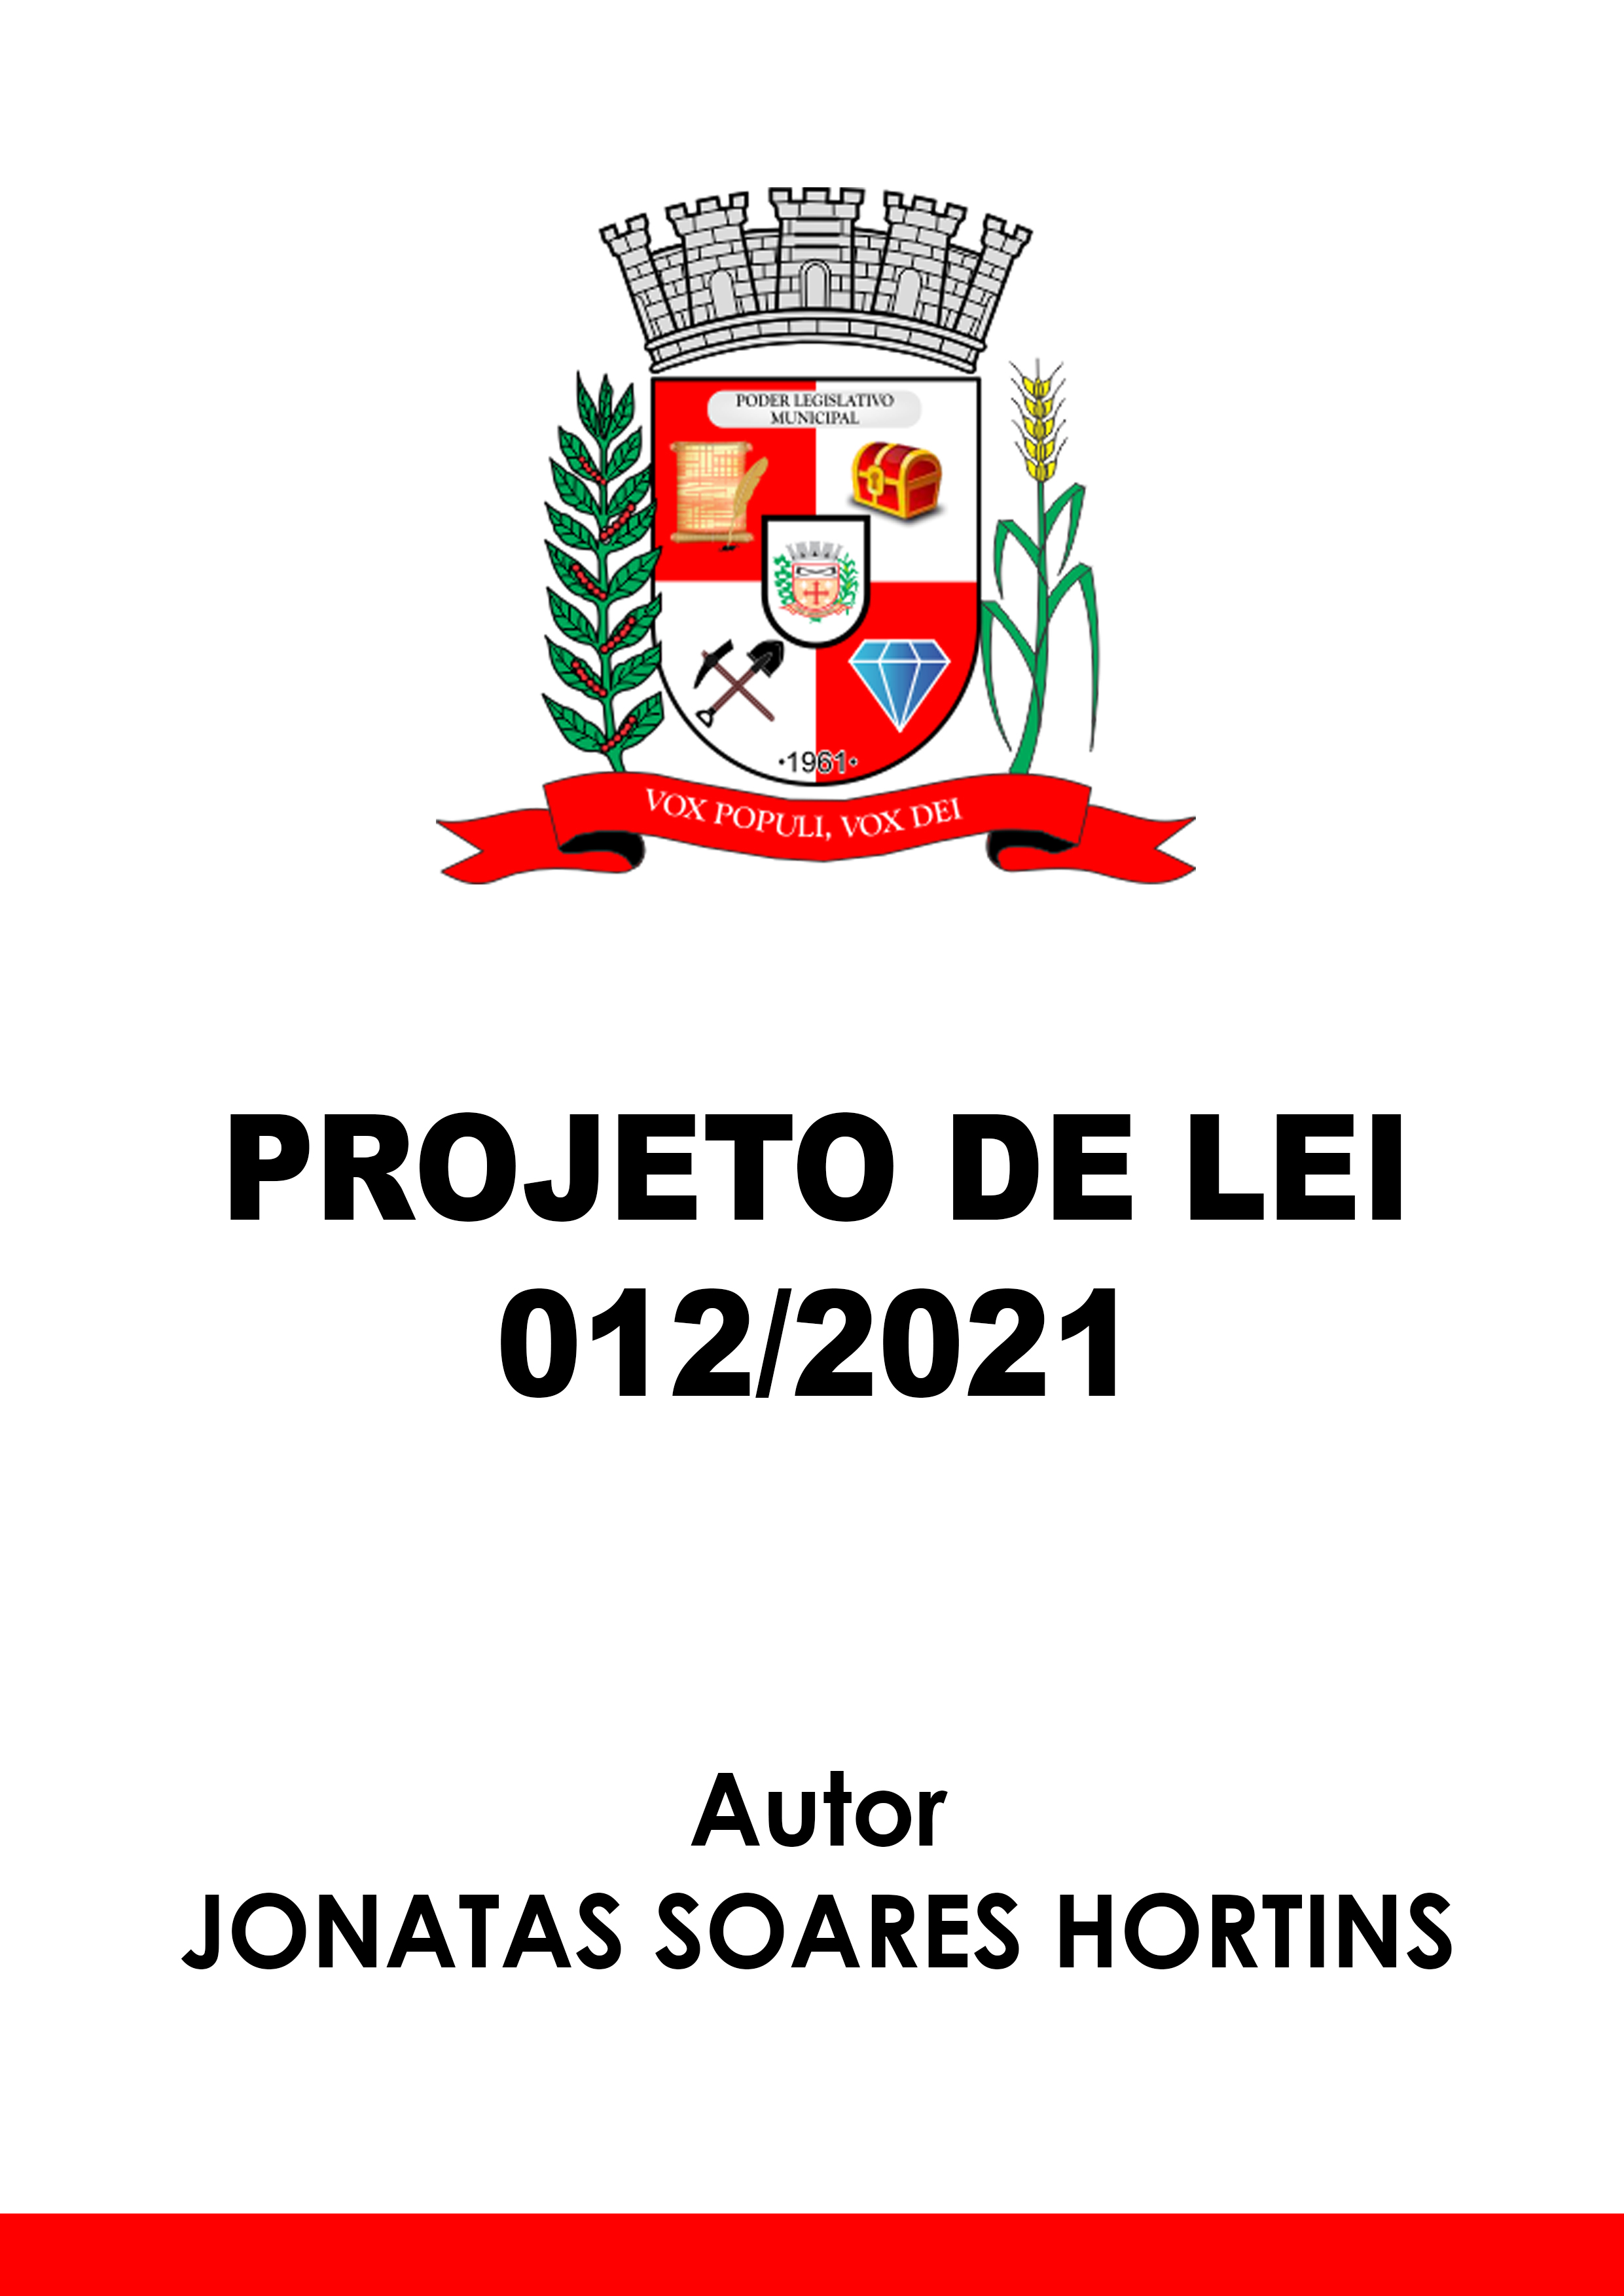 Projeto de Lei 012/2021 - Autor: Jonatas Soares Hortins